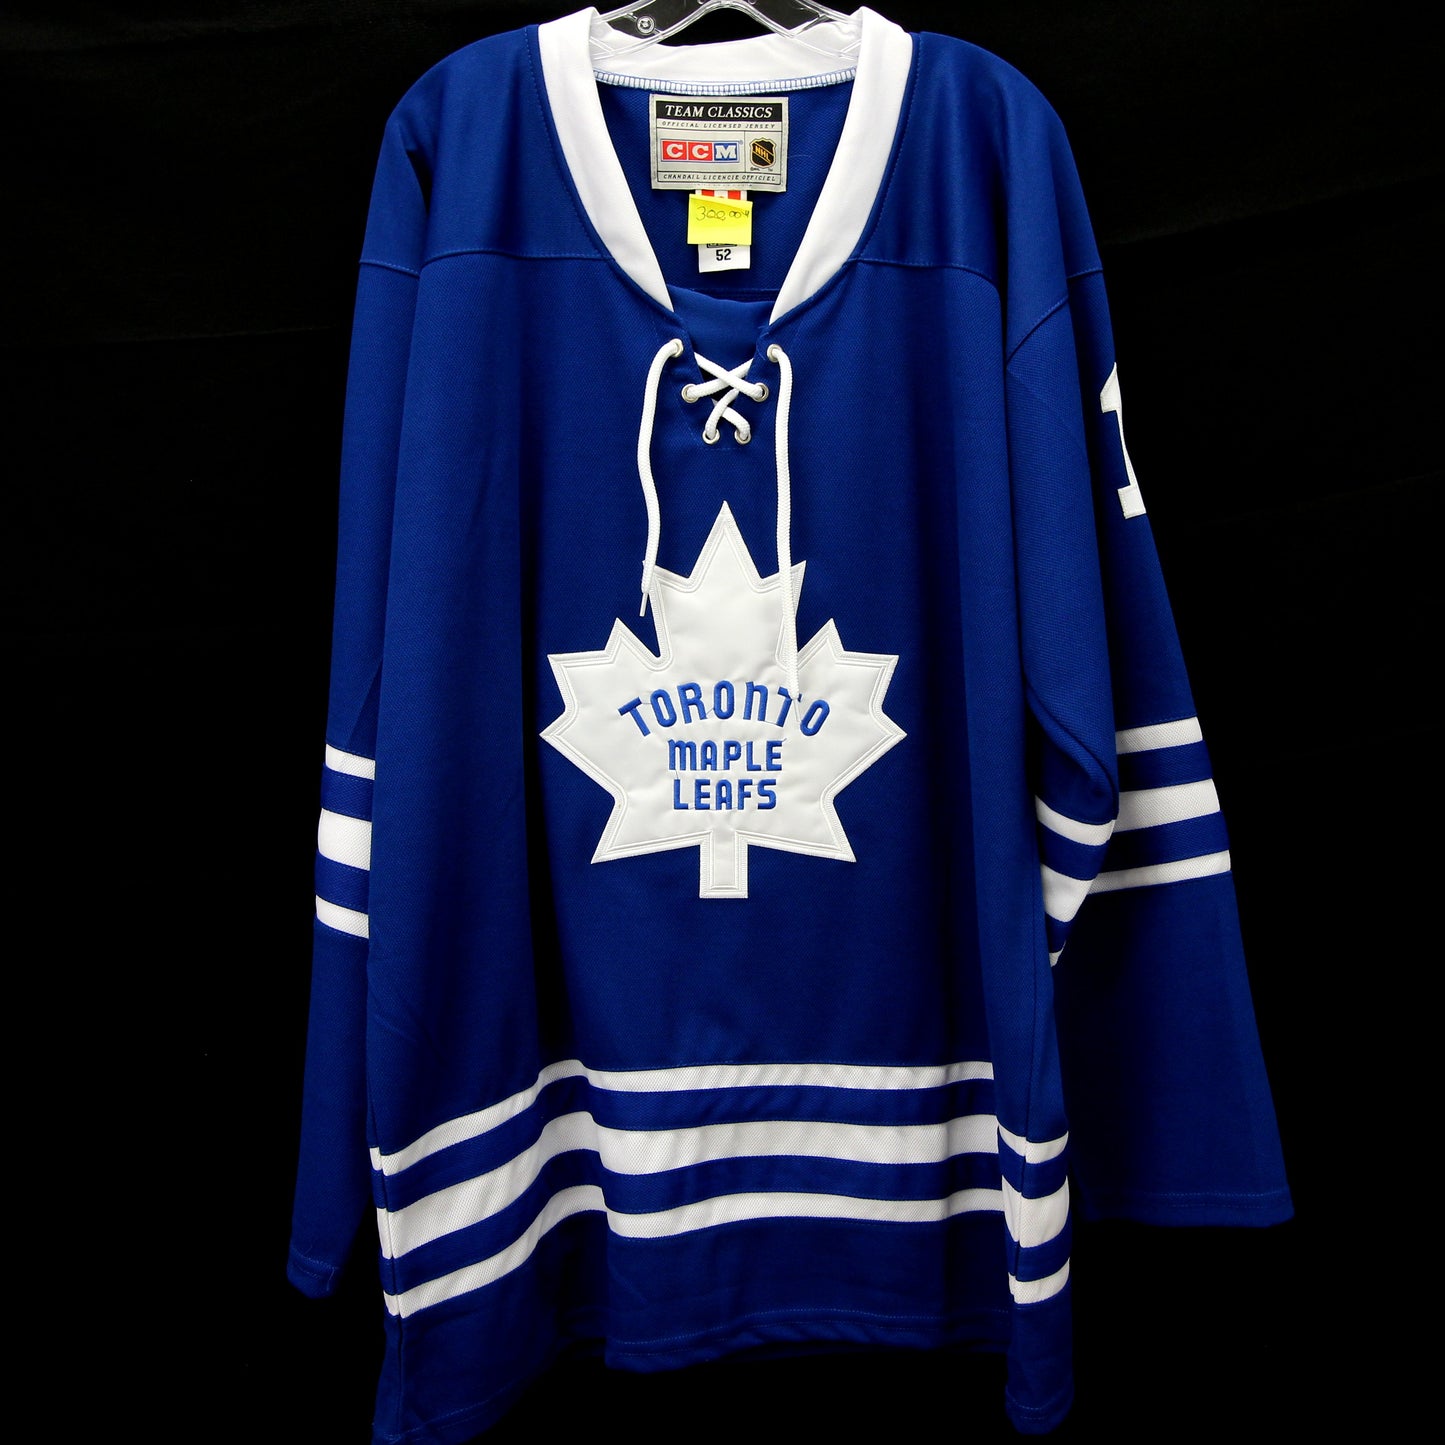 Johnny Bower - Maple Leafs - Autographed Jersey / Chandail autographié X21424